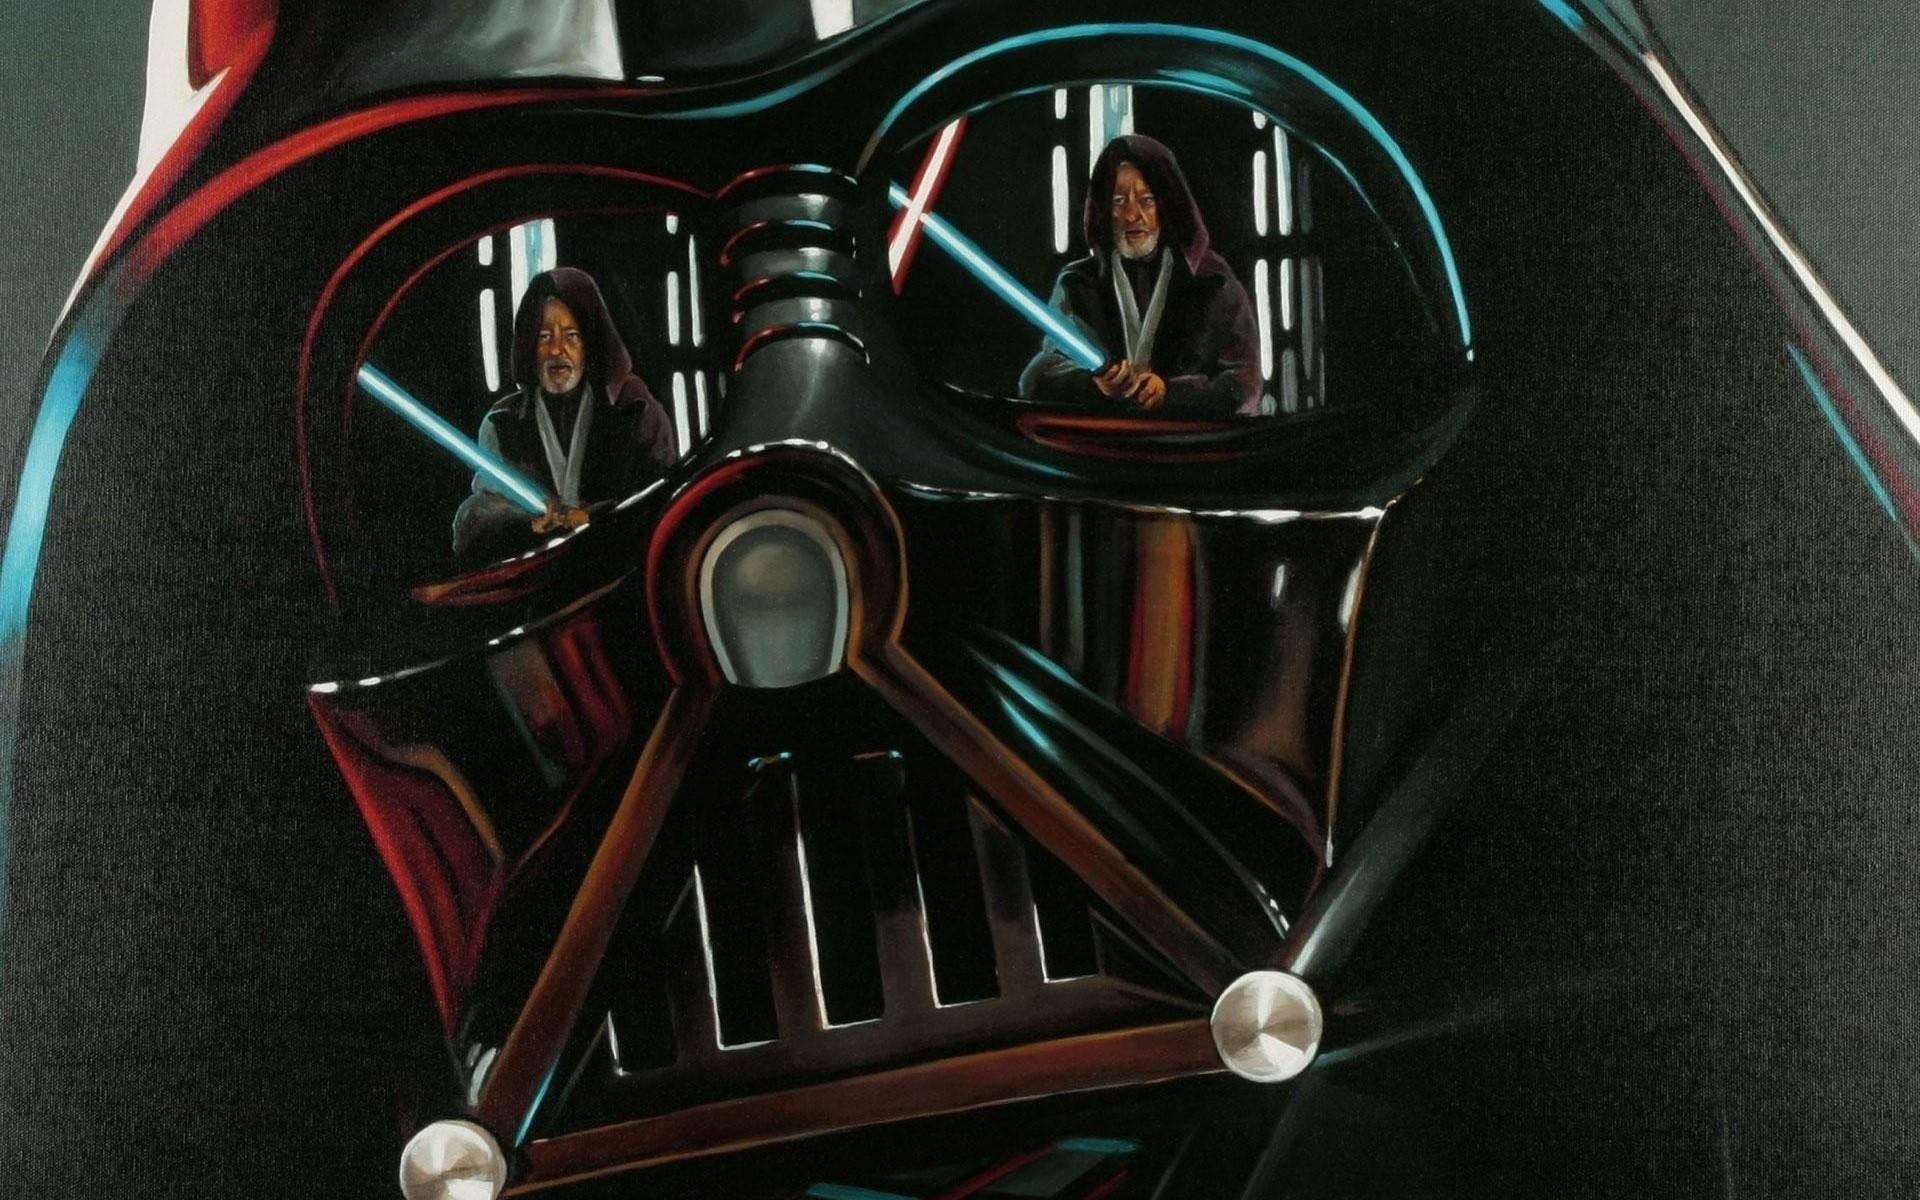 Star Wars Darth Vader Obi Wan Kenobi wallpaper background